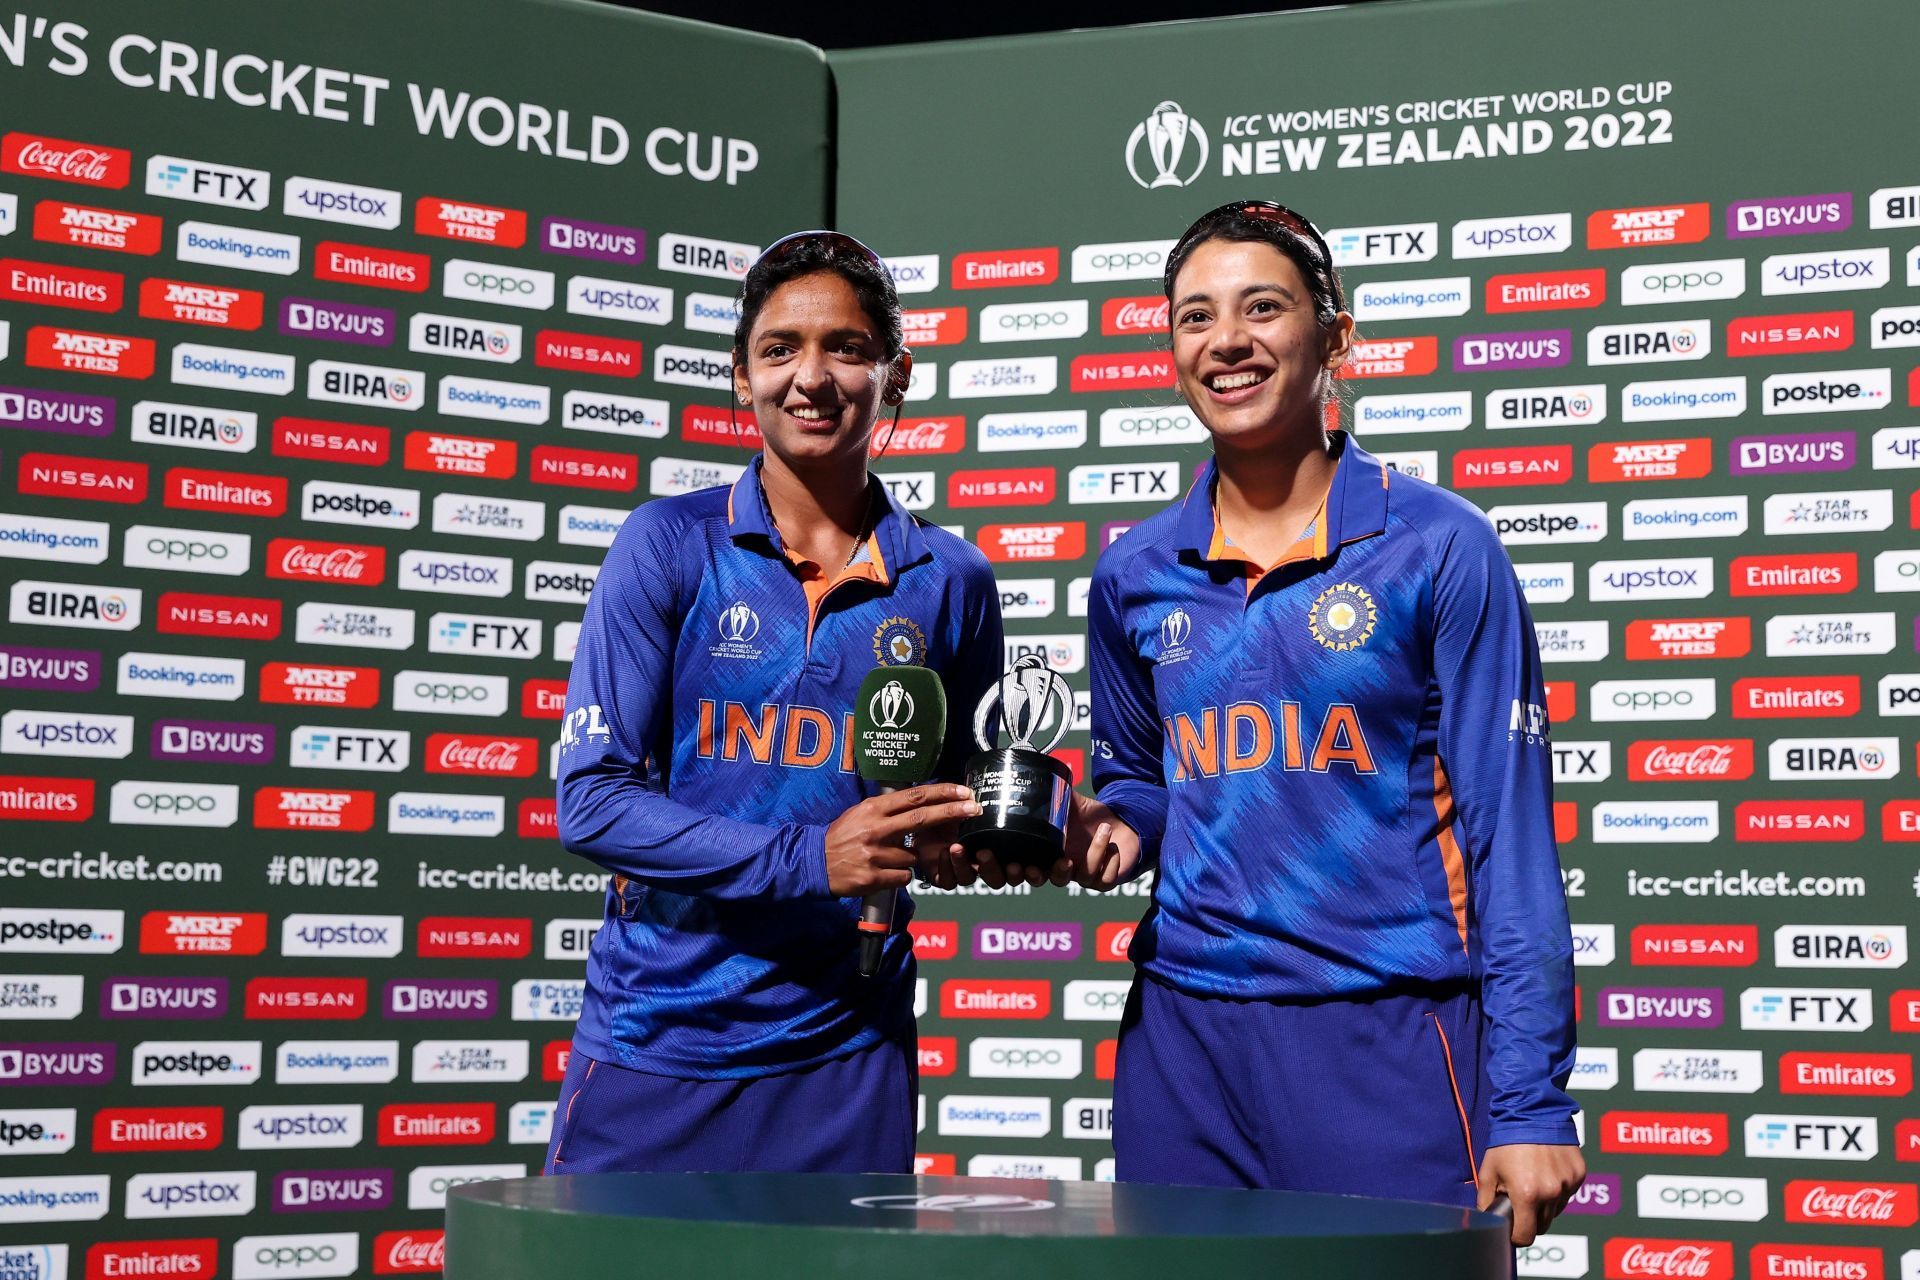 Harmanpreet Kaur and Smriti Mandhana shared the Player of the Match award [P/C: Twitter/BCCI Women]